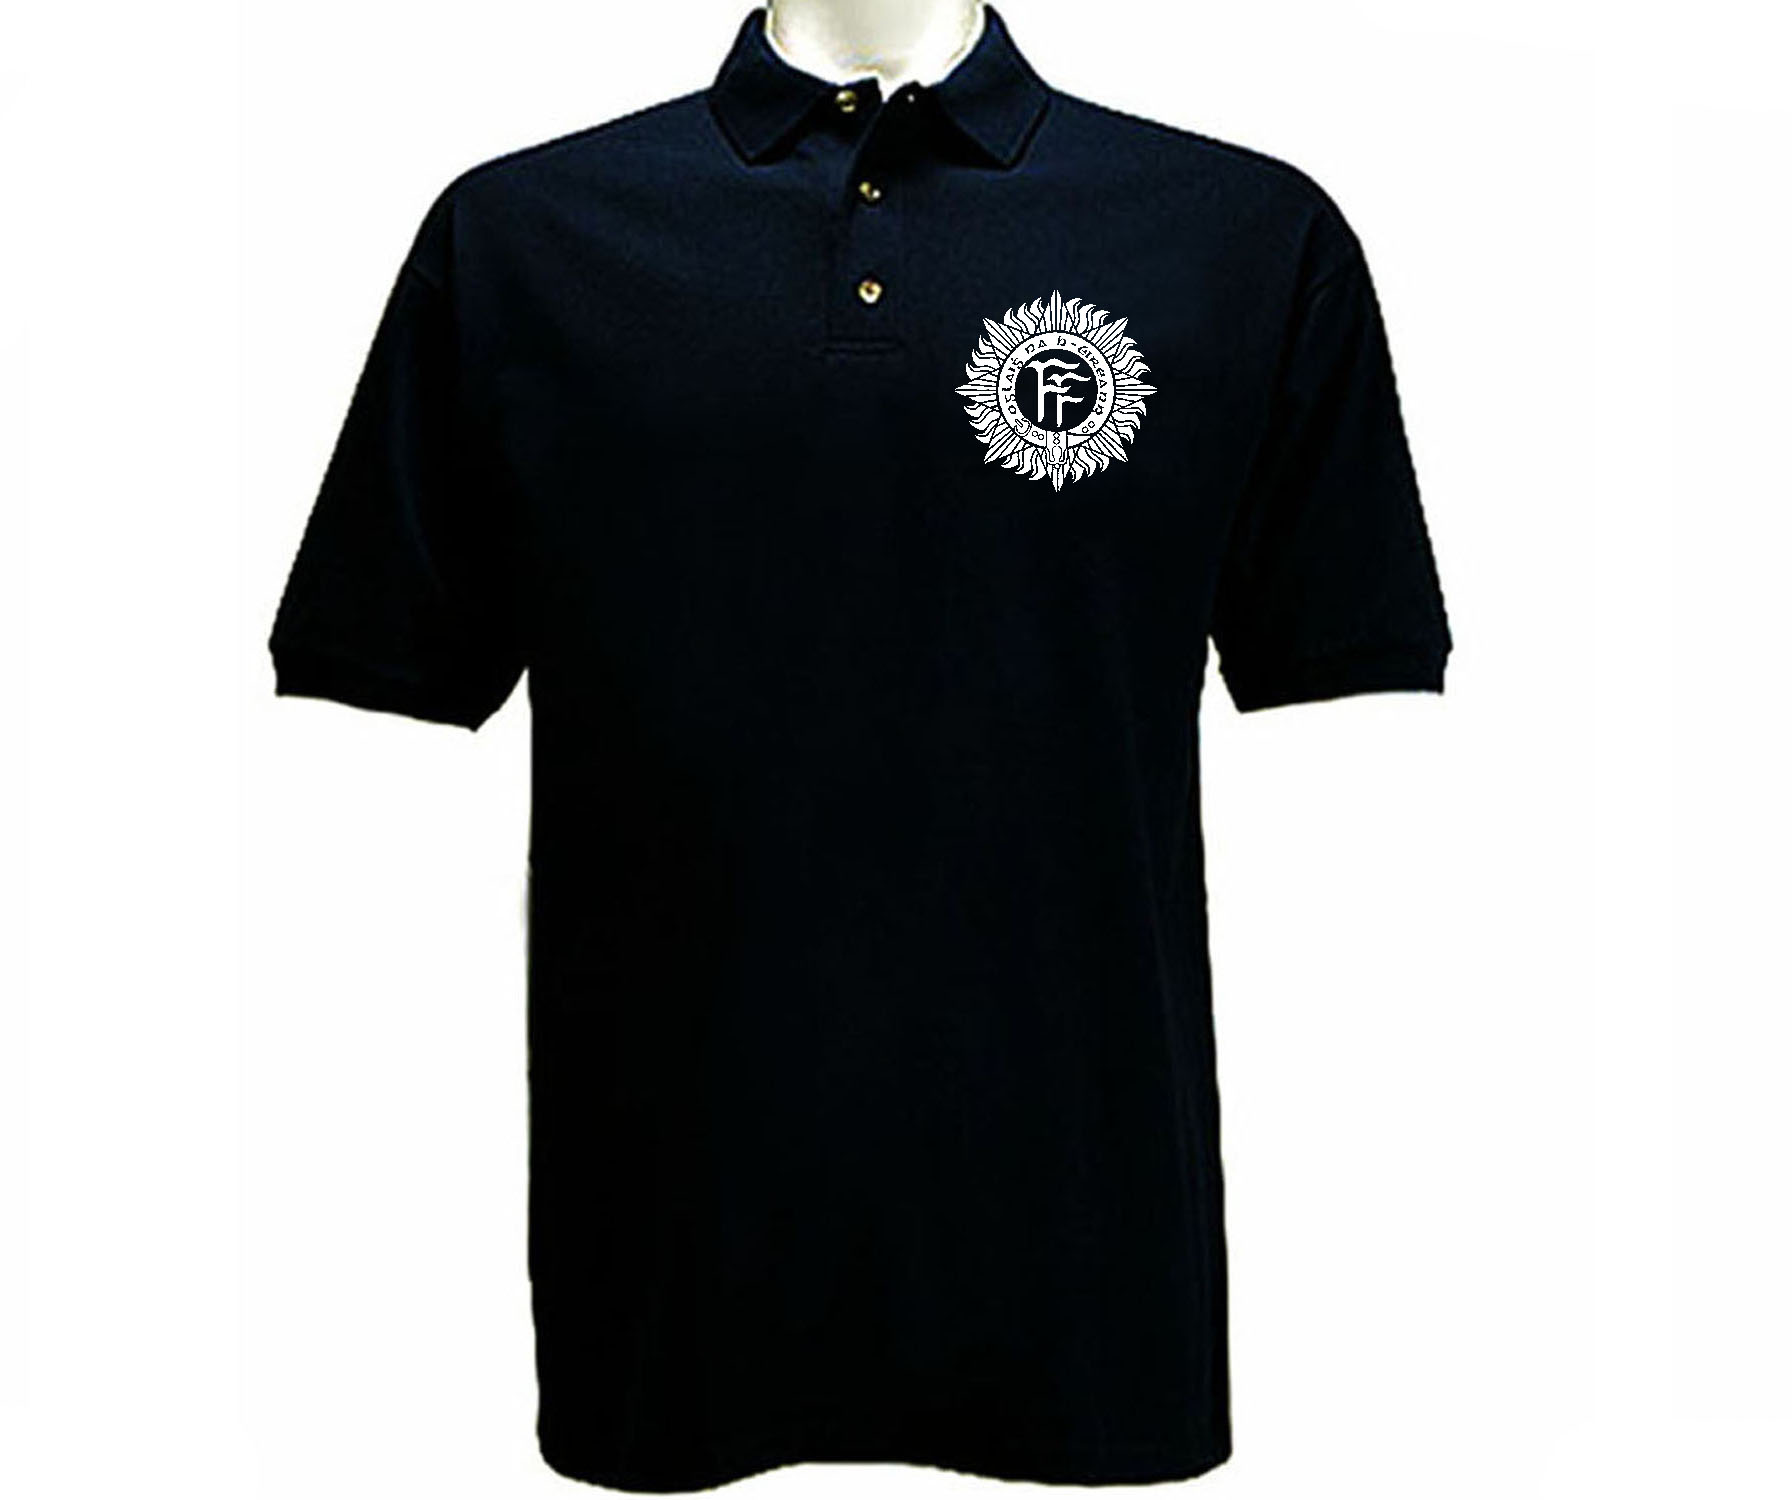 Irish Army emblem polo style black collared t-shirt